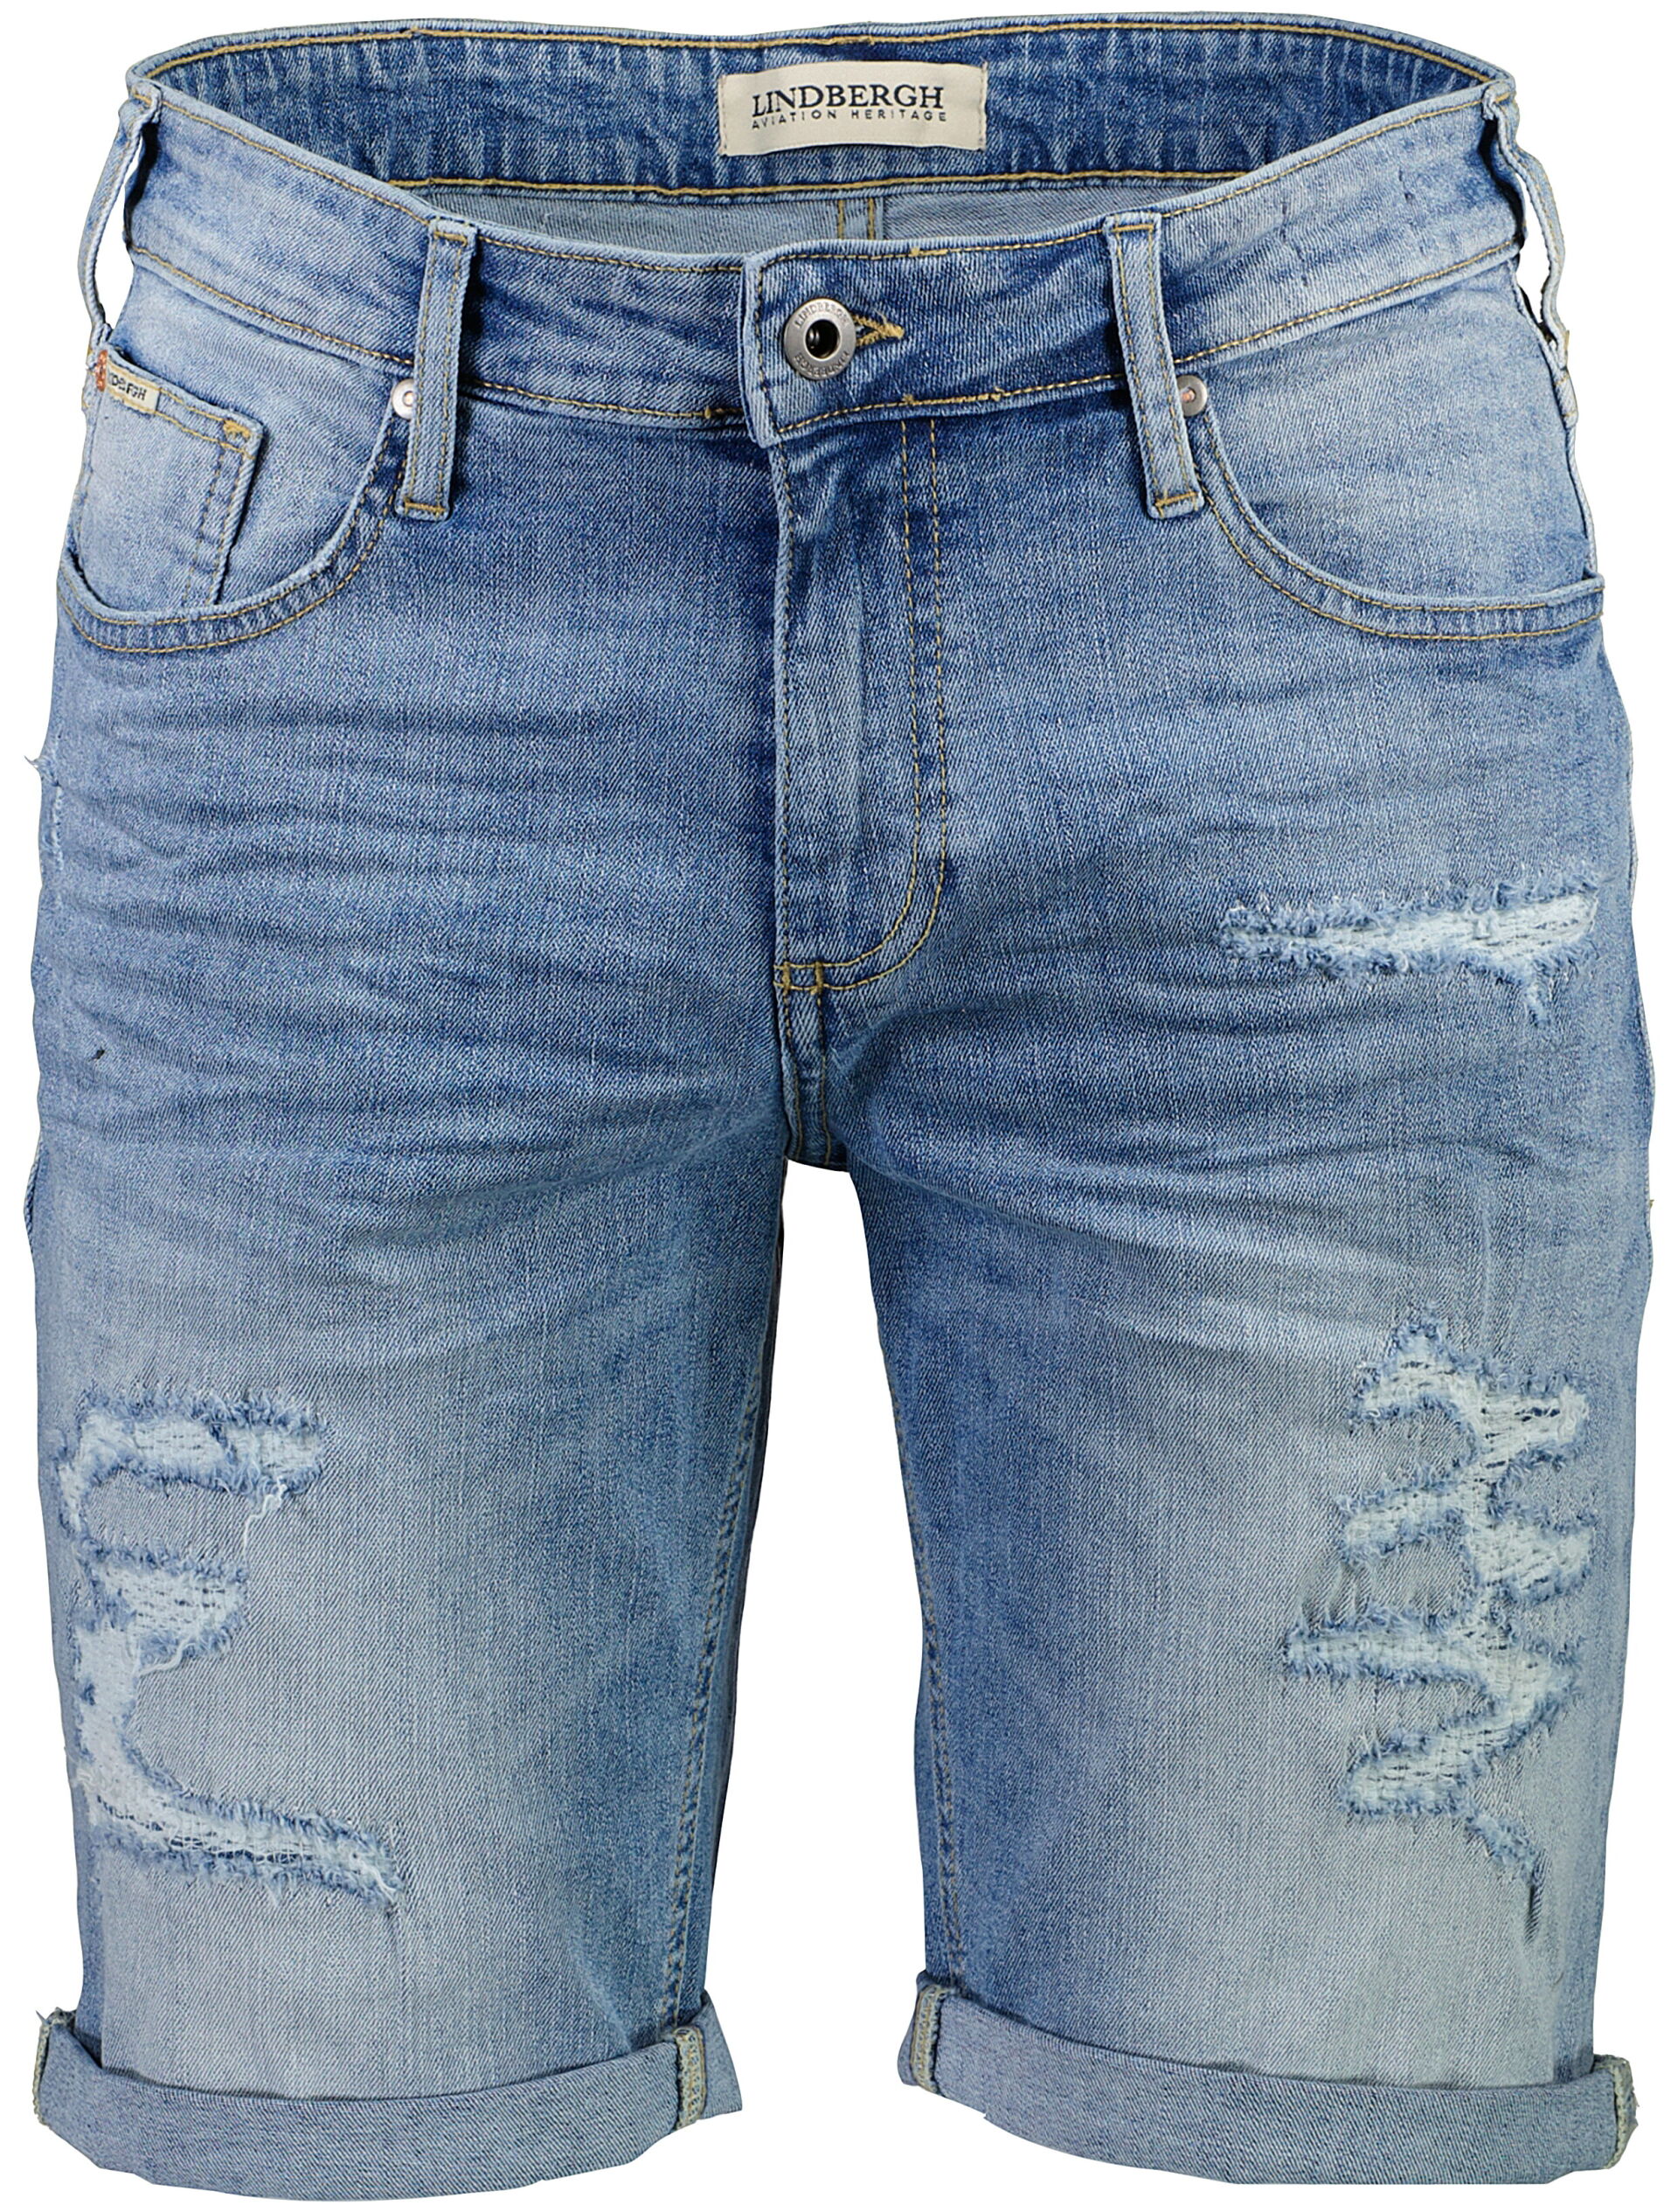 Jeans-Shorts 30-550002HBW